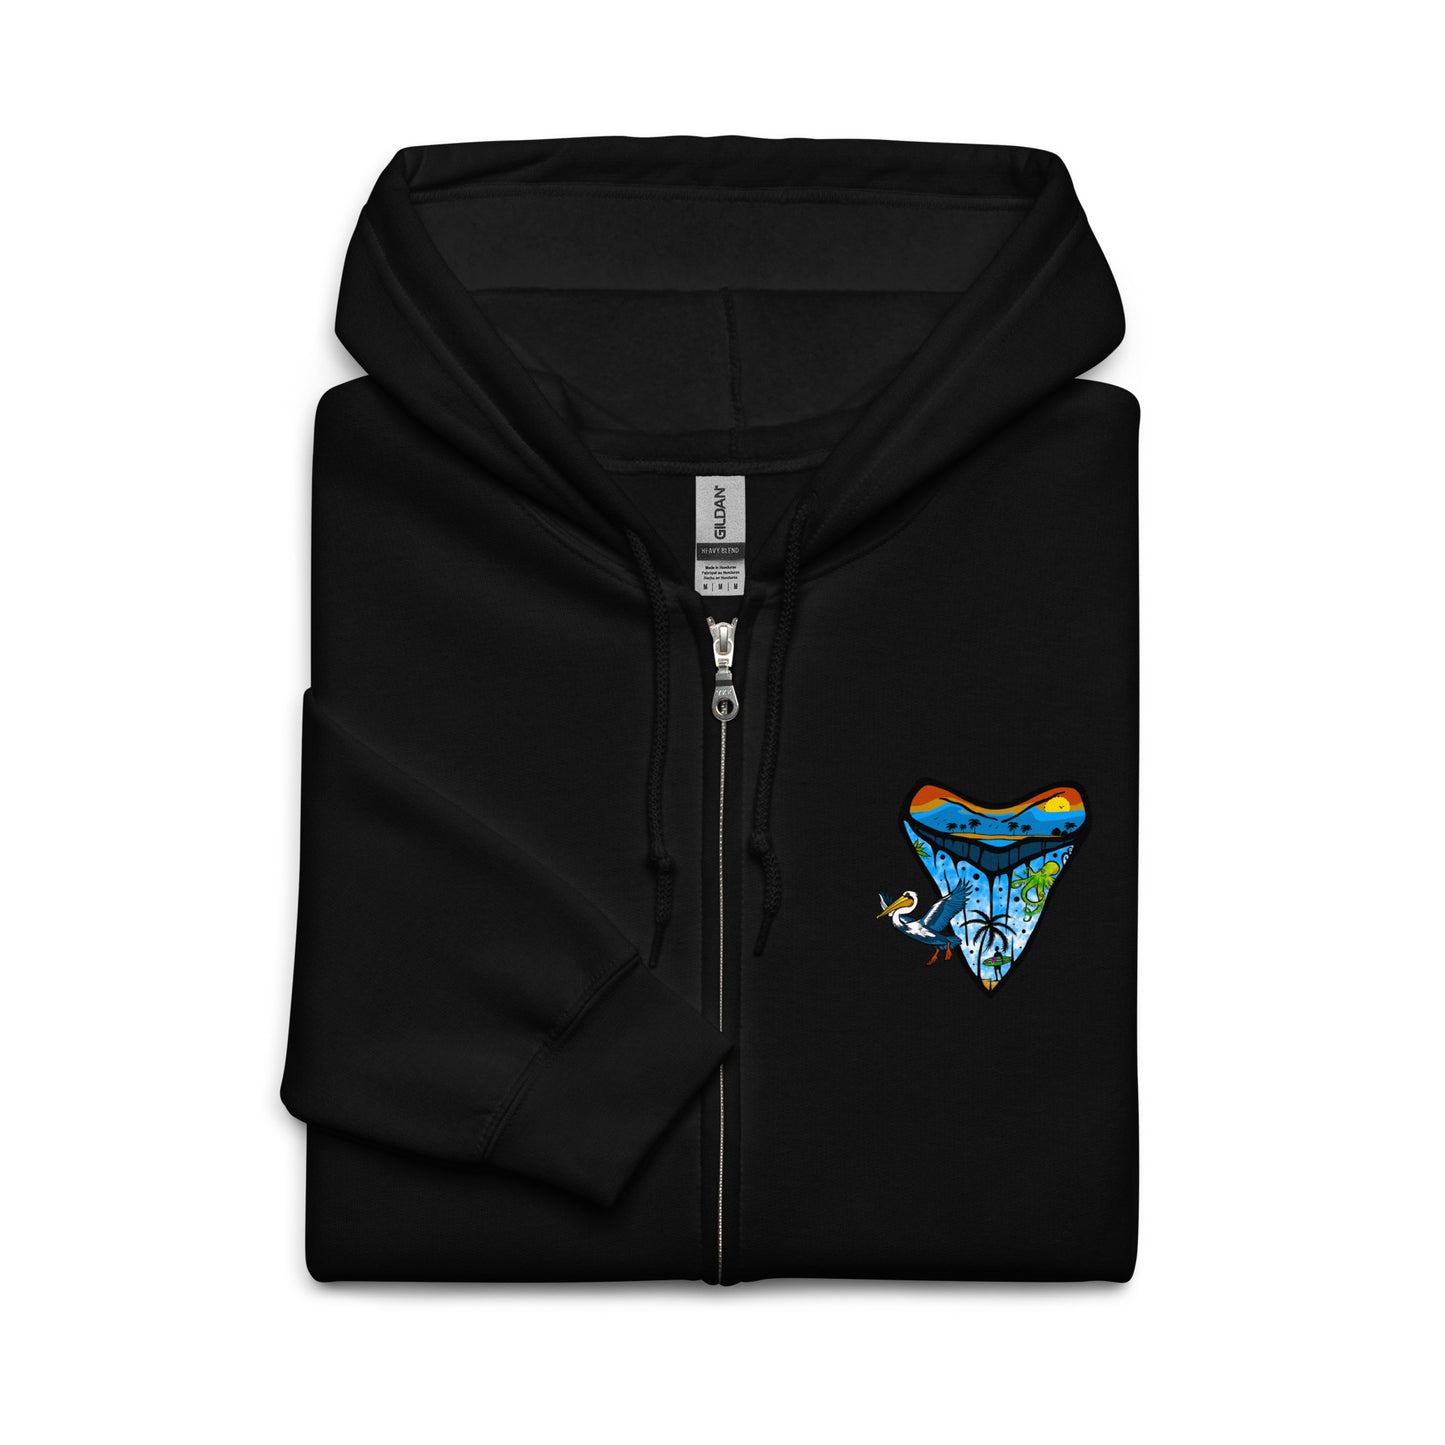 Shark tooth - Unisex ZIP hoodie